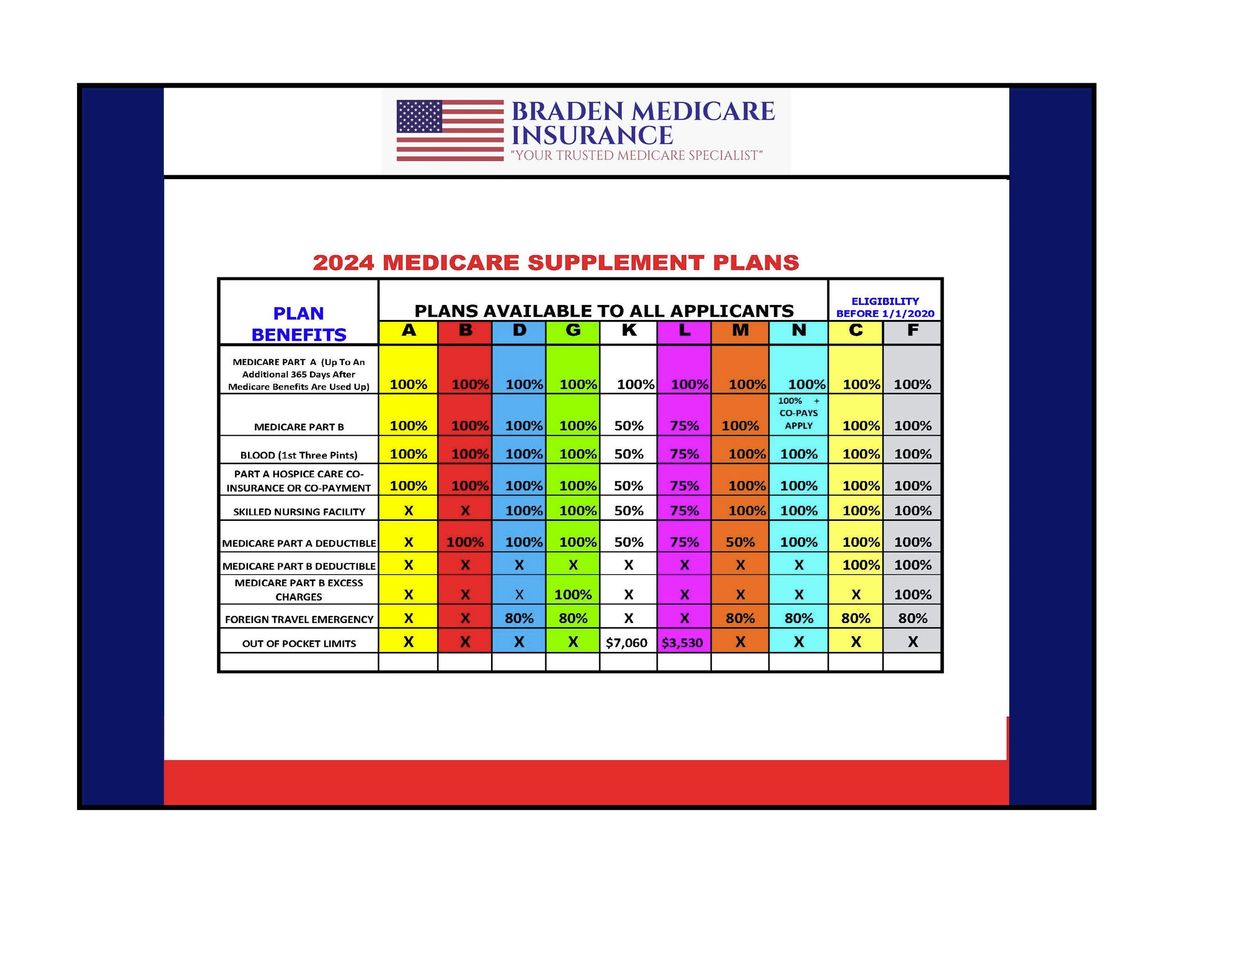 Braden Medicare Insurance 2024 Medicare Supplement Plan Comparison Chart